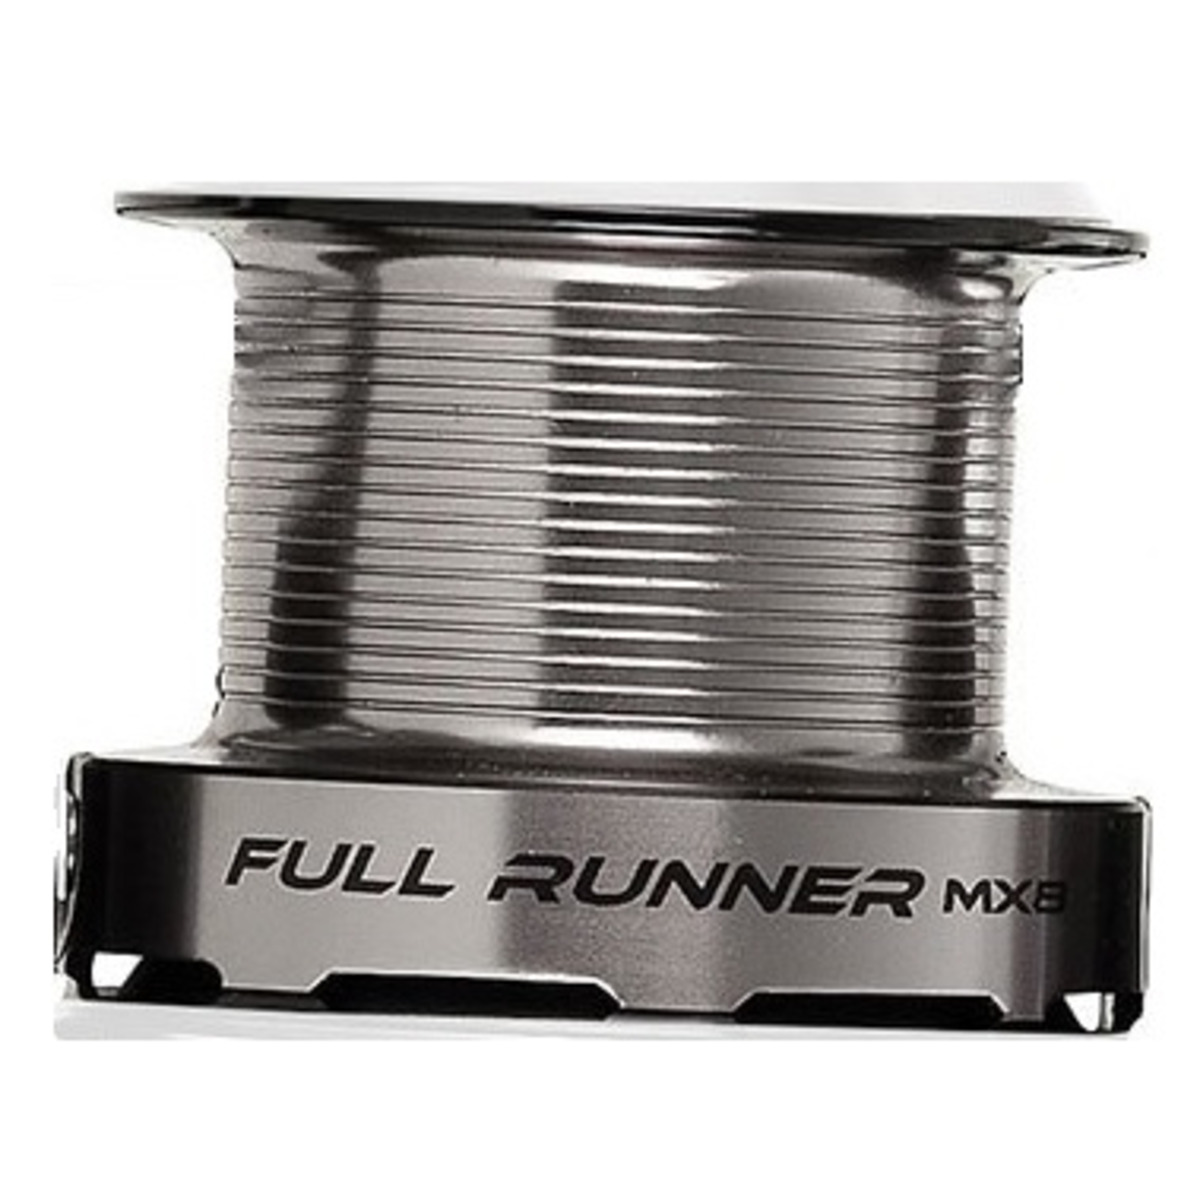 Mitchell Bobina Full Runner Mx8 - 7000 - Spare spool